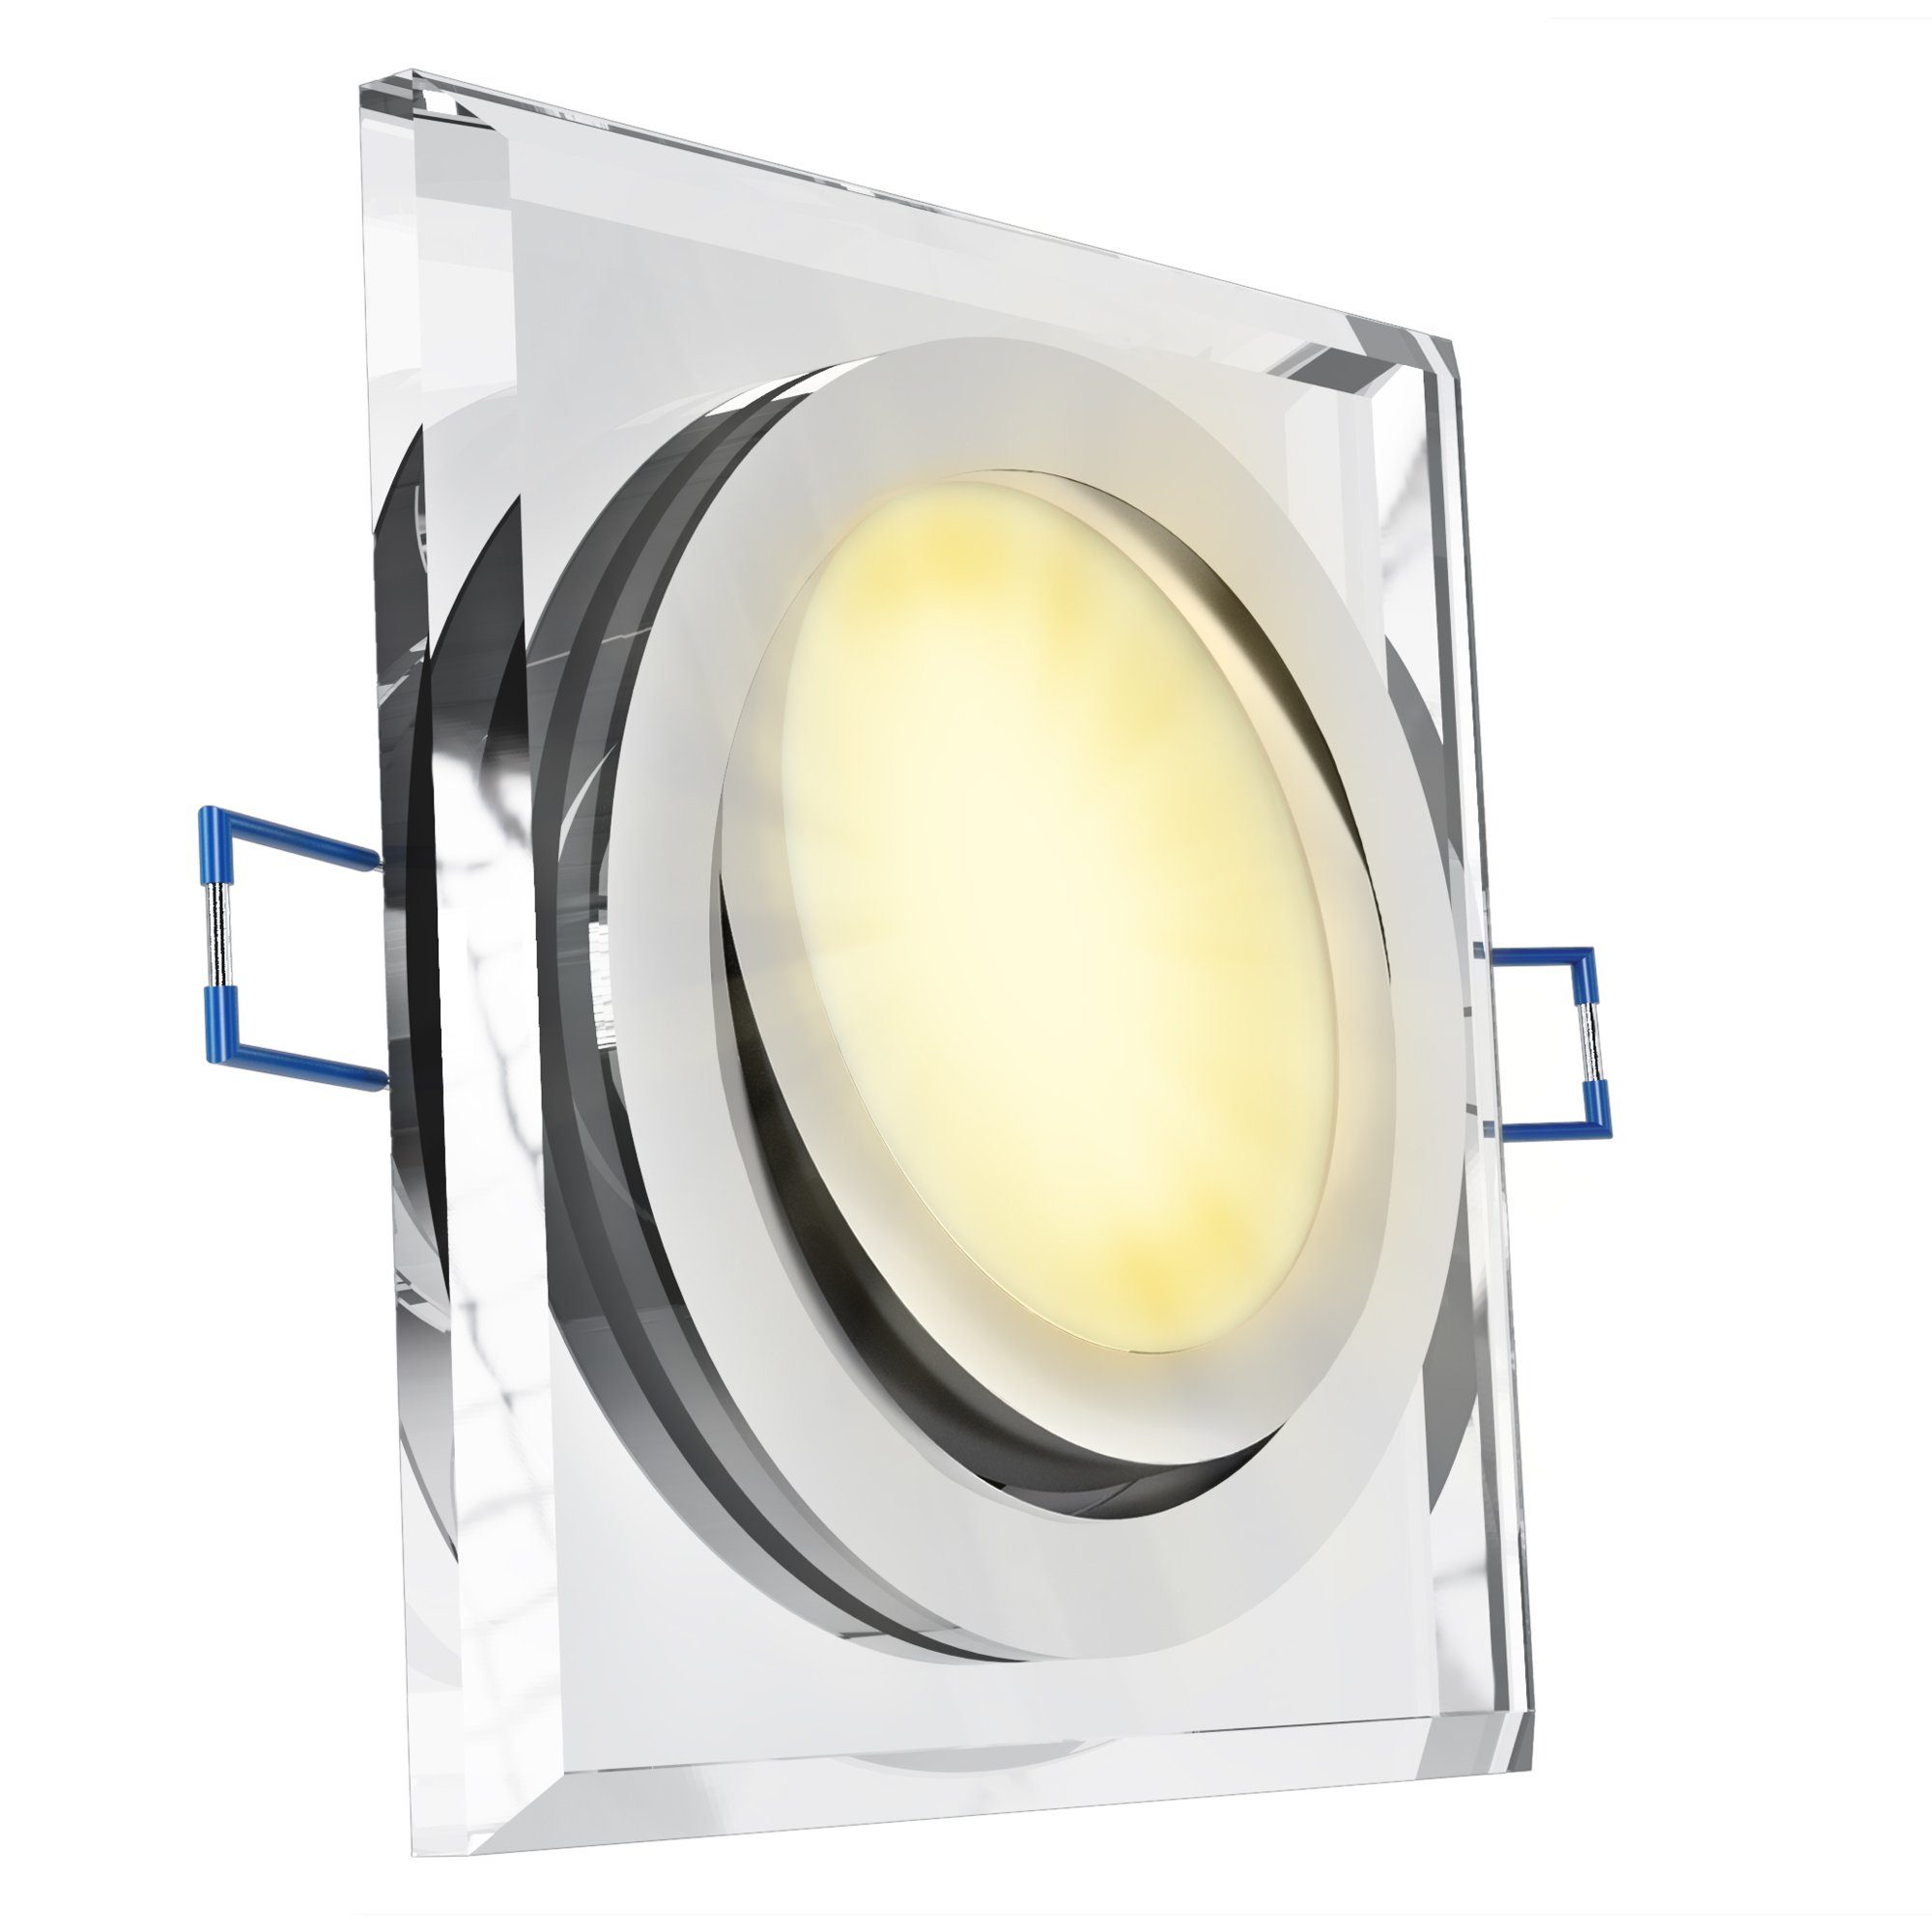 SSC-LUXon LED Einbaustrahler Glas LED Einbauspot flach schwenkbar eckig mit LED Modul dimmbar, Warmweiß